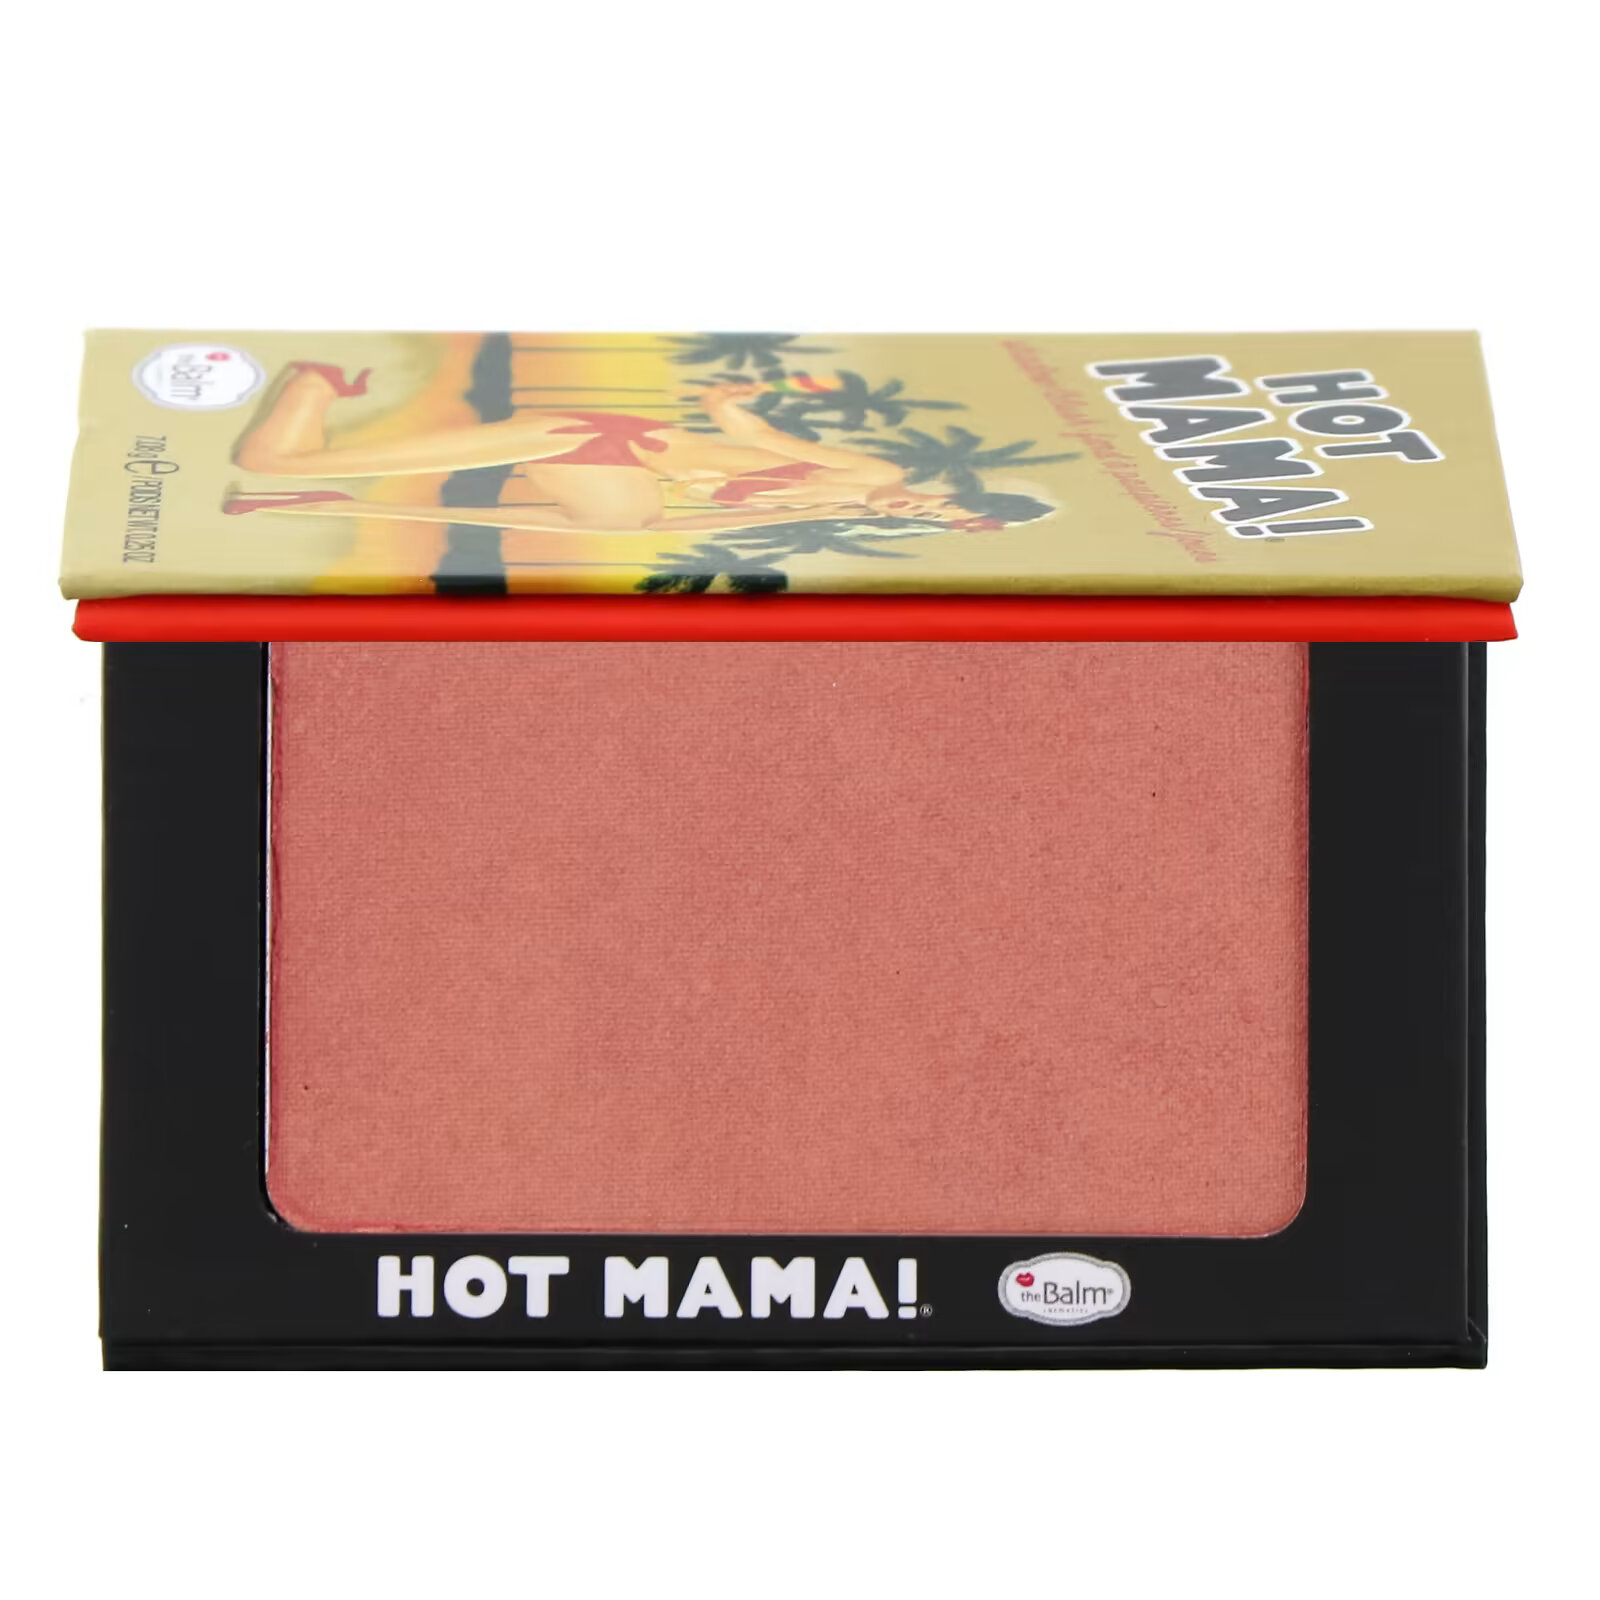 theBalm Cosmetics, Hot Mama, тени/румяна, 7,08 г румяна thebalm румяна хайлайтер hot mama в дорожном формате